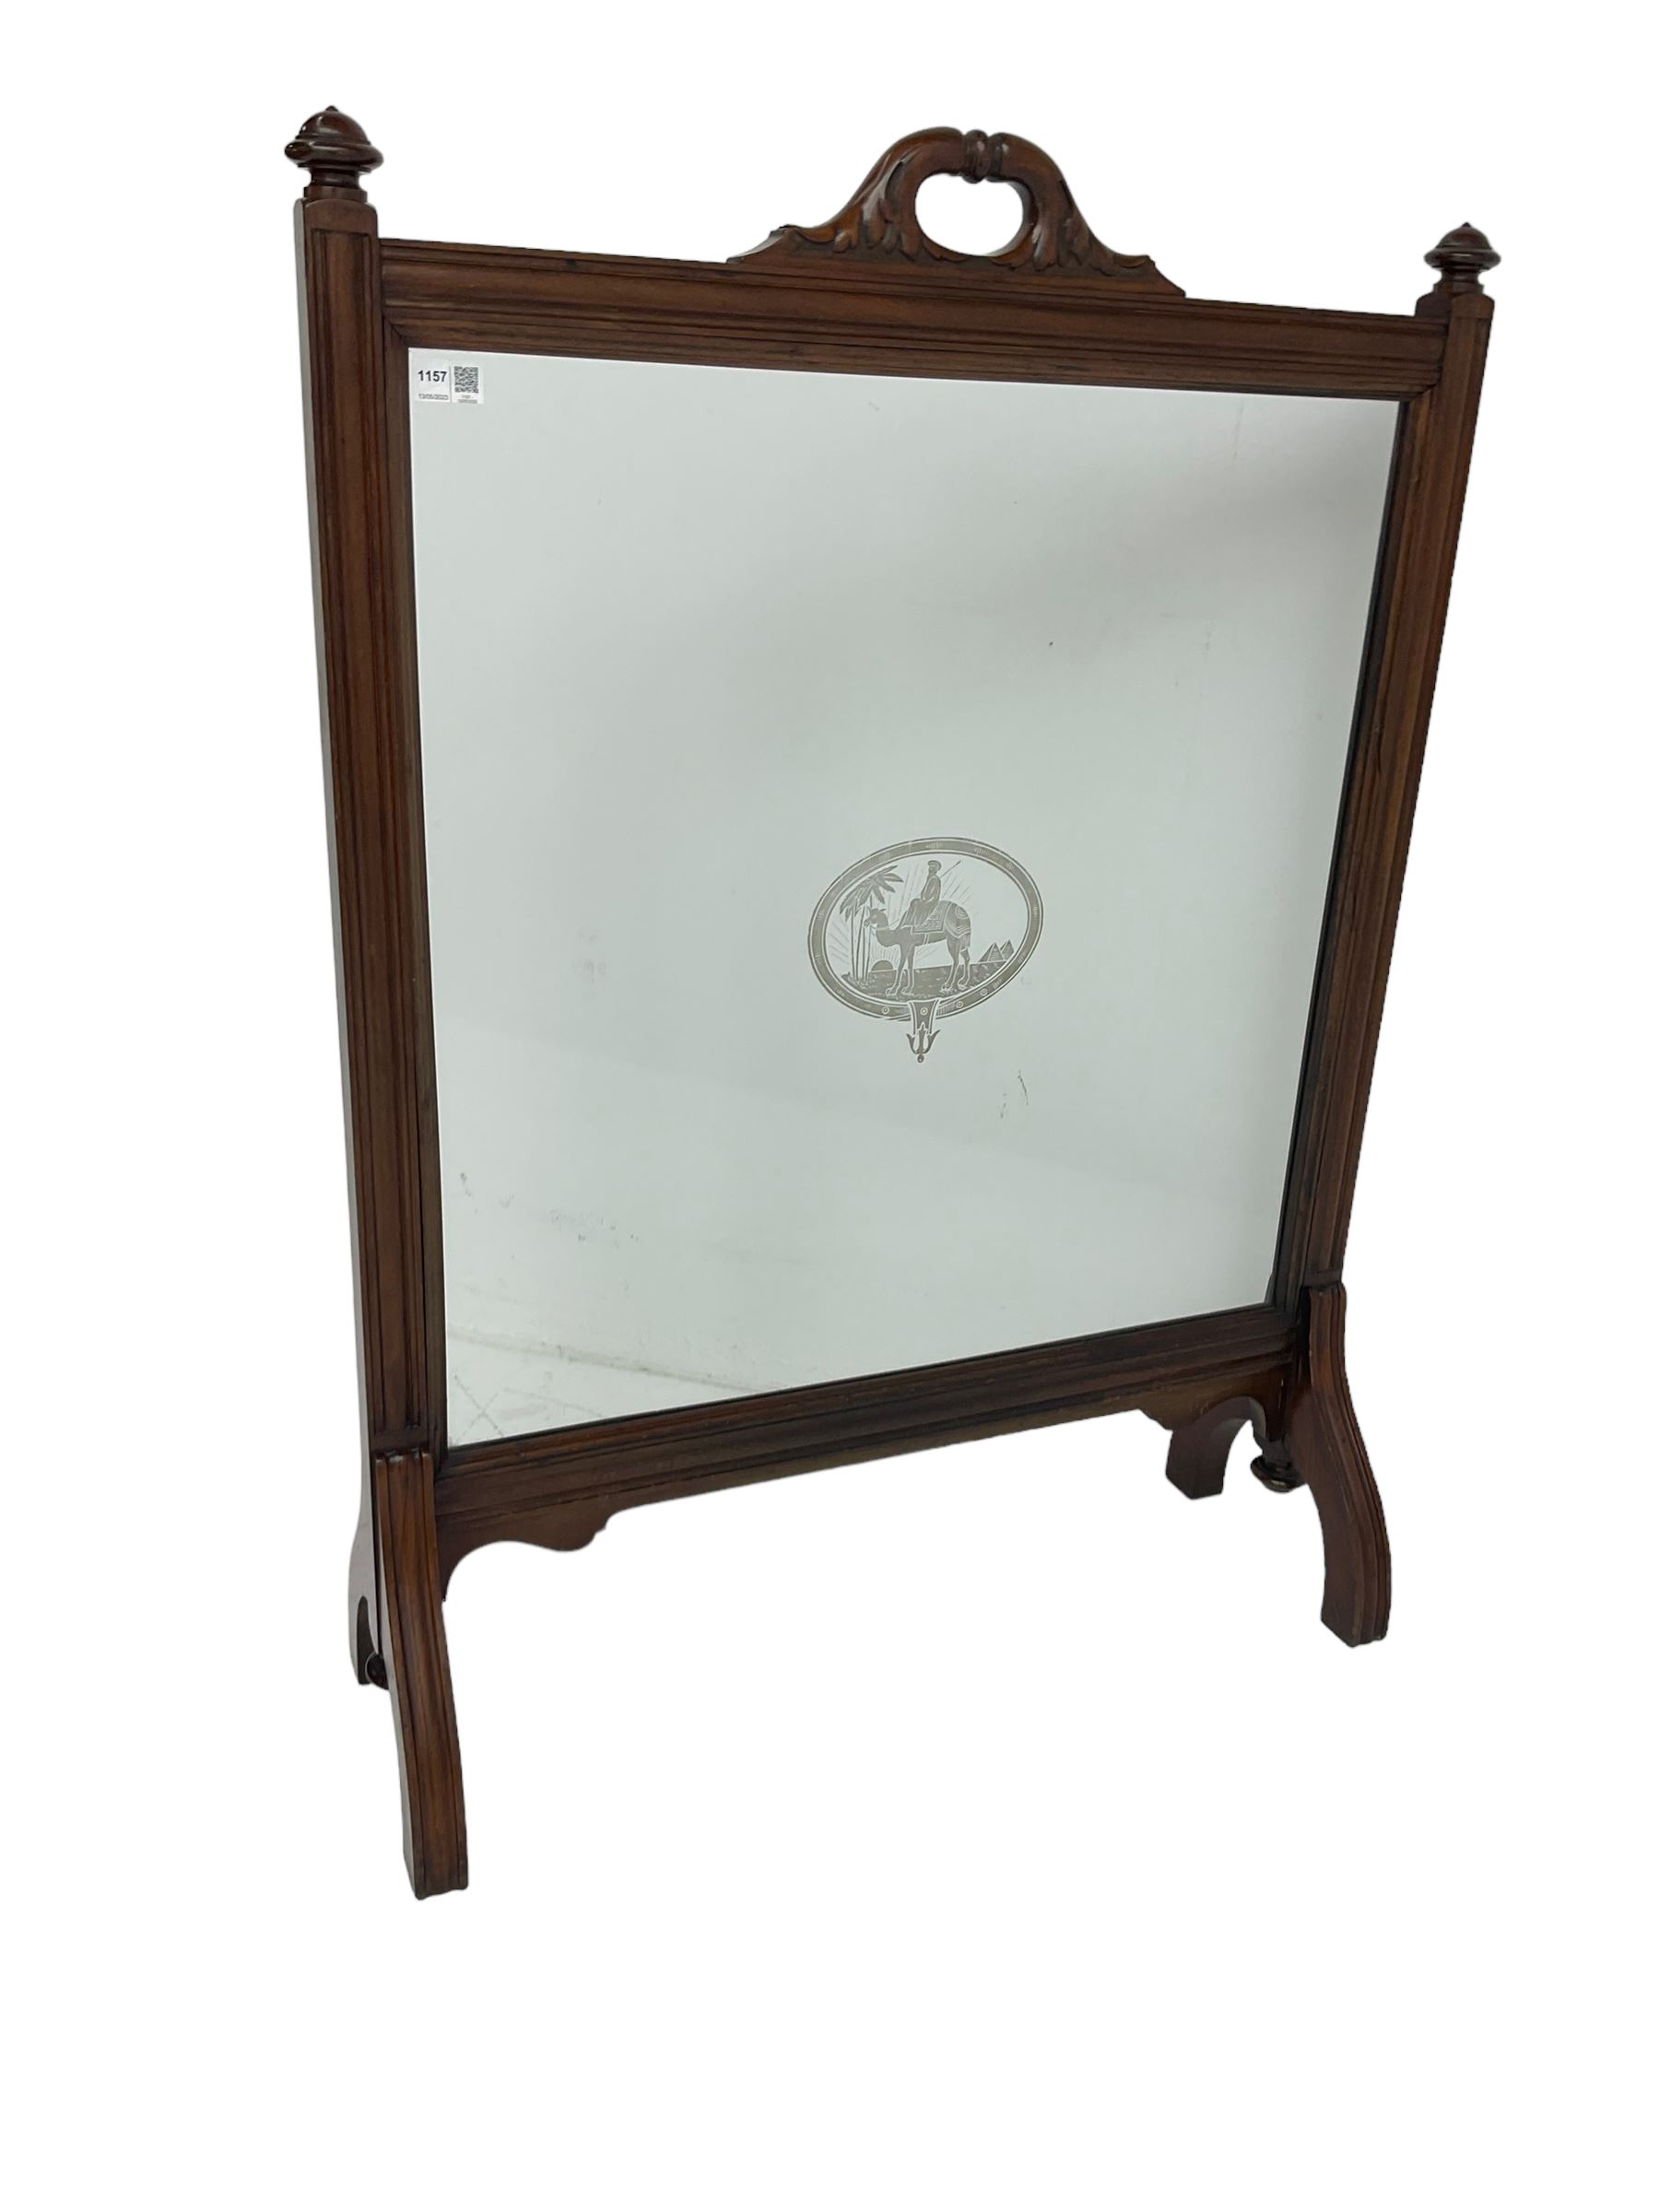 Regency design mahogany framed glass fire screen - Image 2 of 4